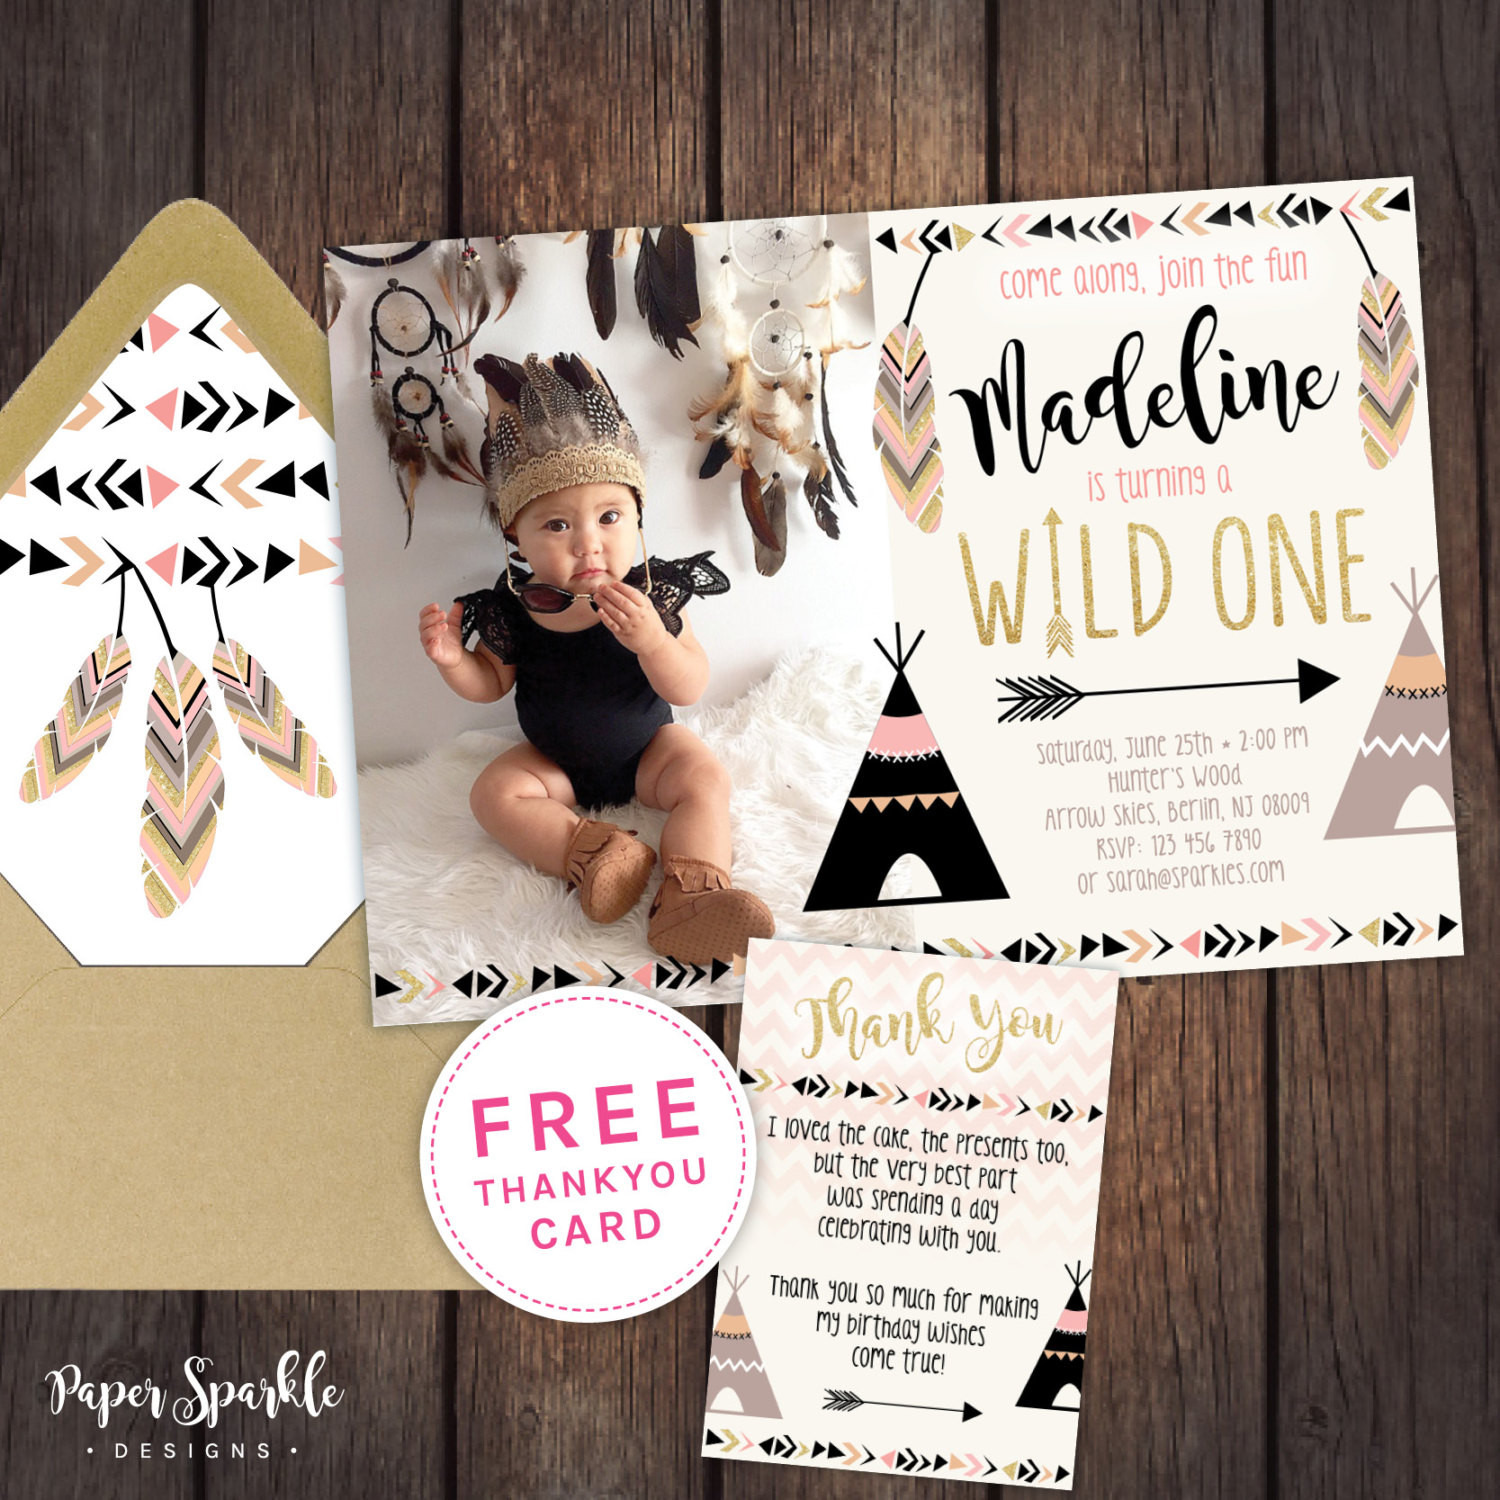 Best ideas about Wild One Birthday Invitations
. Save or Pin Wild one invitation First birthday invitation pow wow Now.